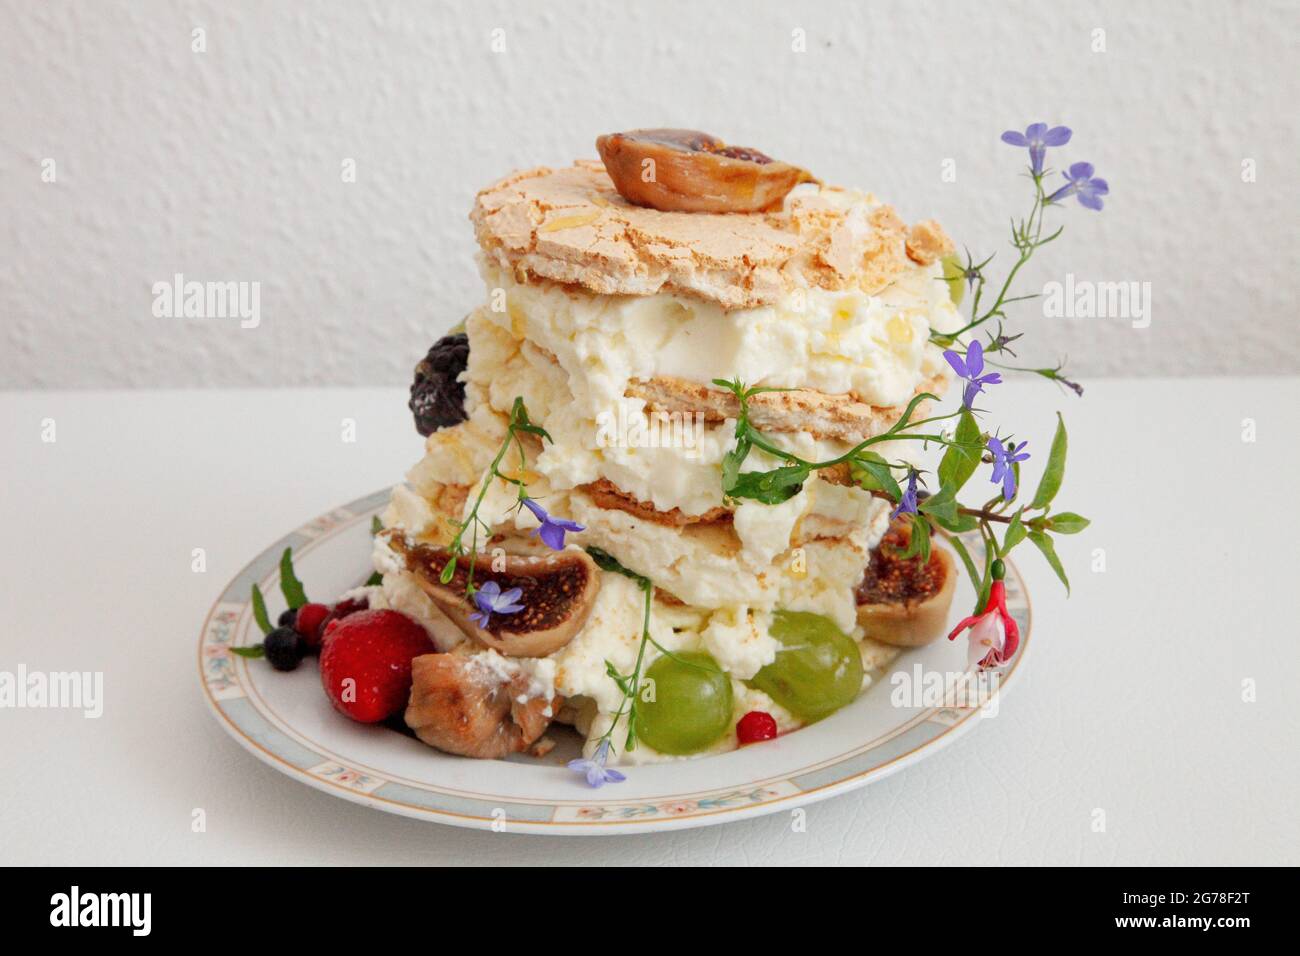 Dessert, meringue with figs, strawberries, grapes, mascarpone, Stock Photo